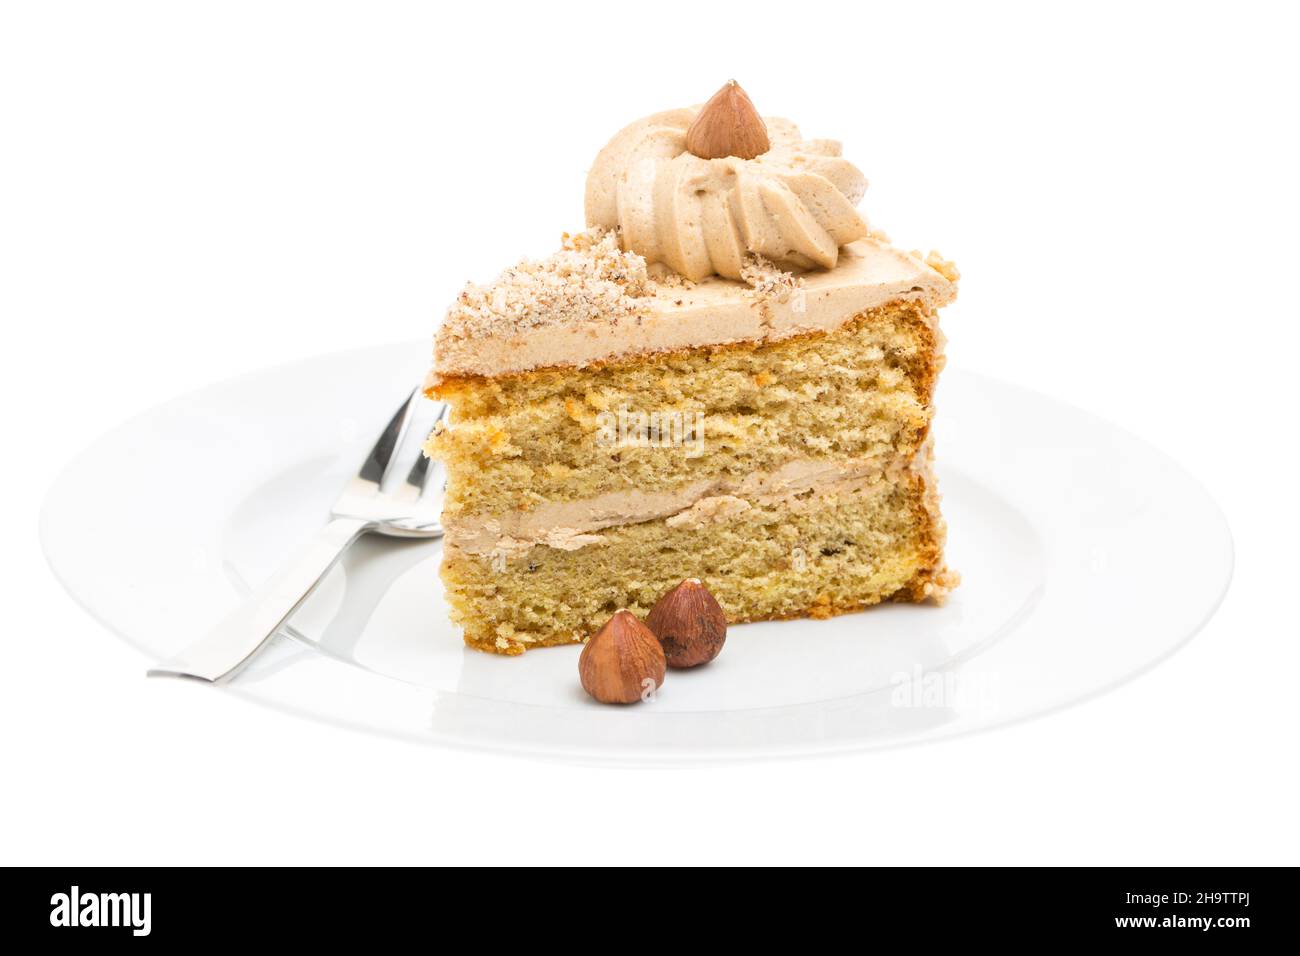 Nut cake, nut cake, one, piece, nuts, hazelnut, fork, plate, white, background, next to it, single, alone, cake decorating, cream, brown, dessert, sma Stock Photo